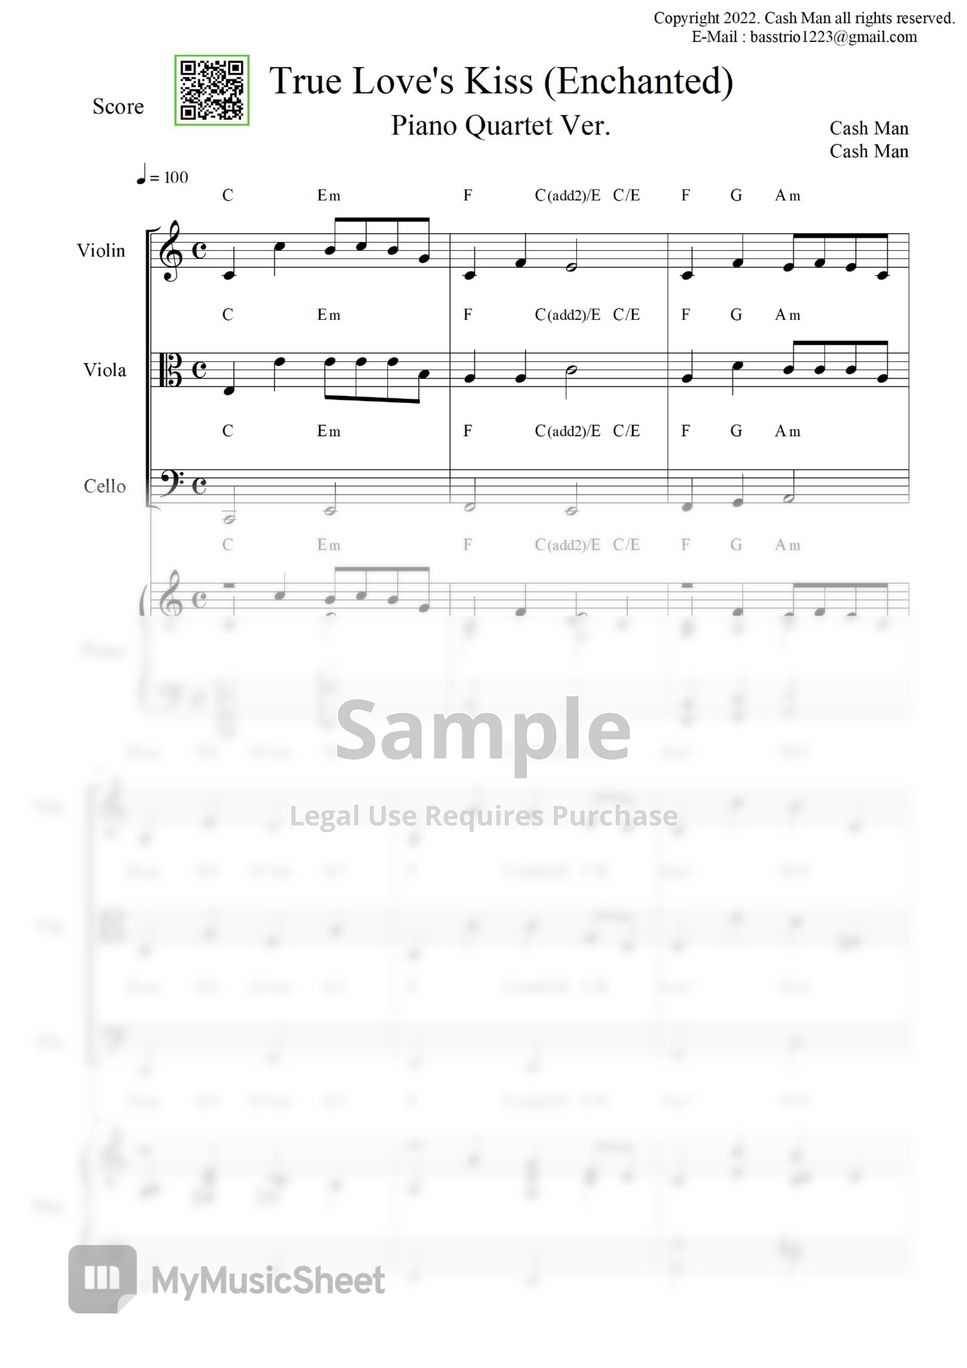 Enchanted - True Love's Kiss (Piano Quartet / Full Score / Part Score / Chord / Arrangment) by Cash Man